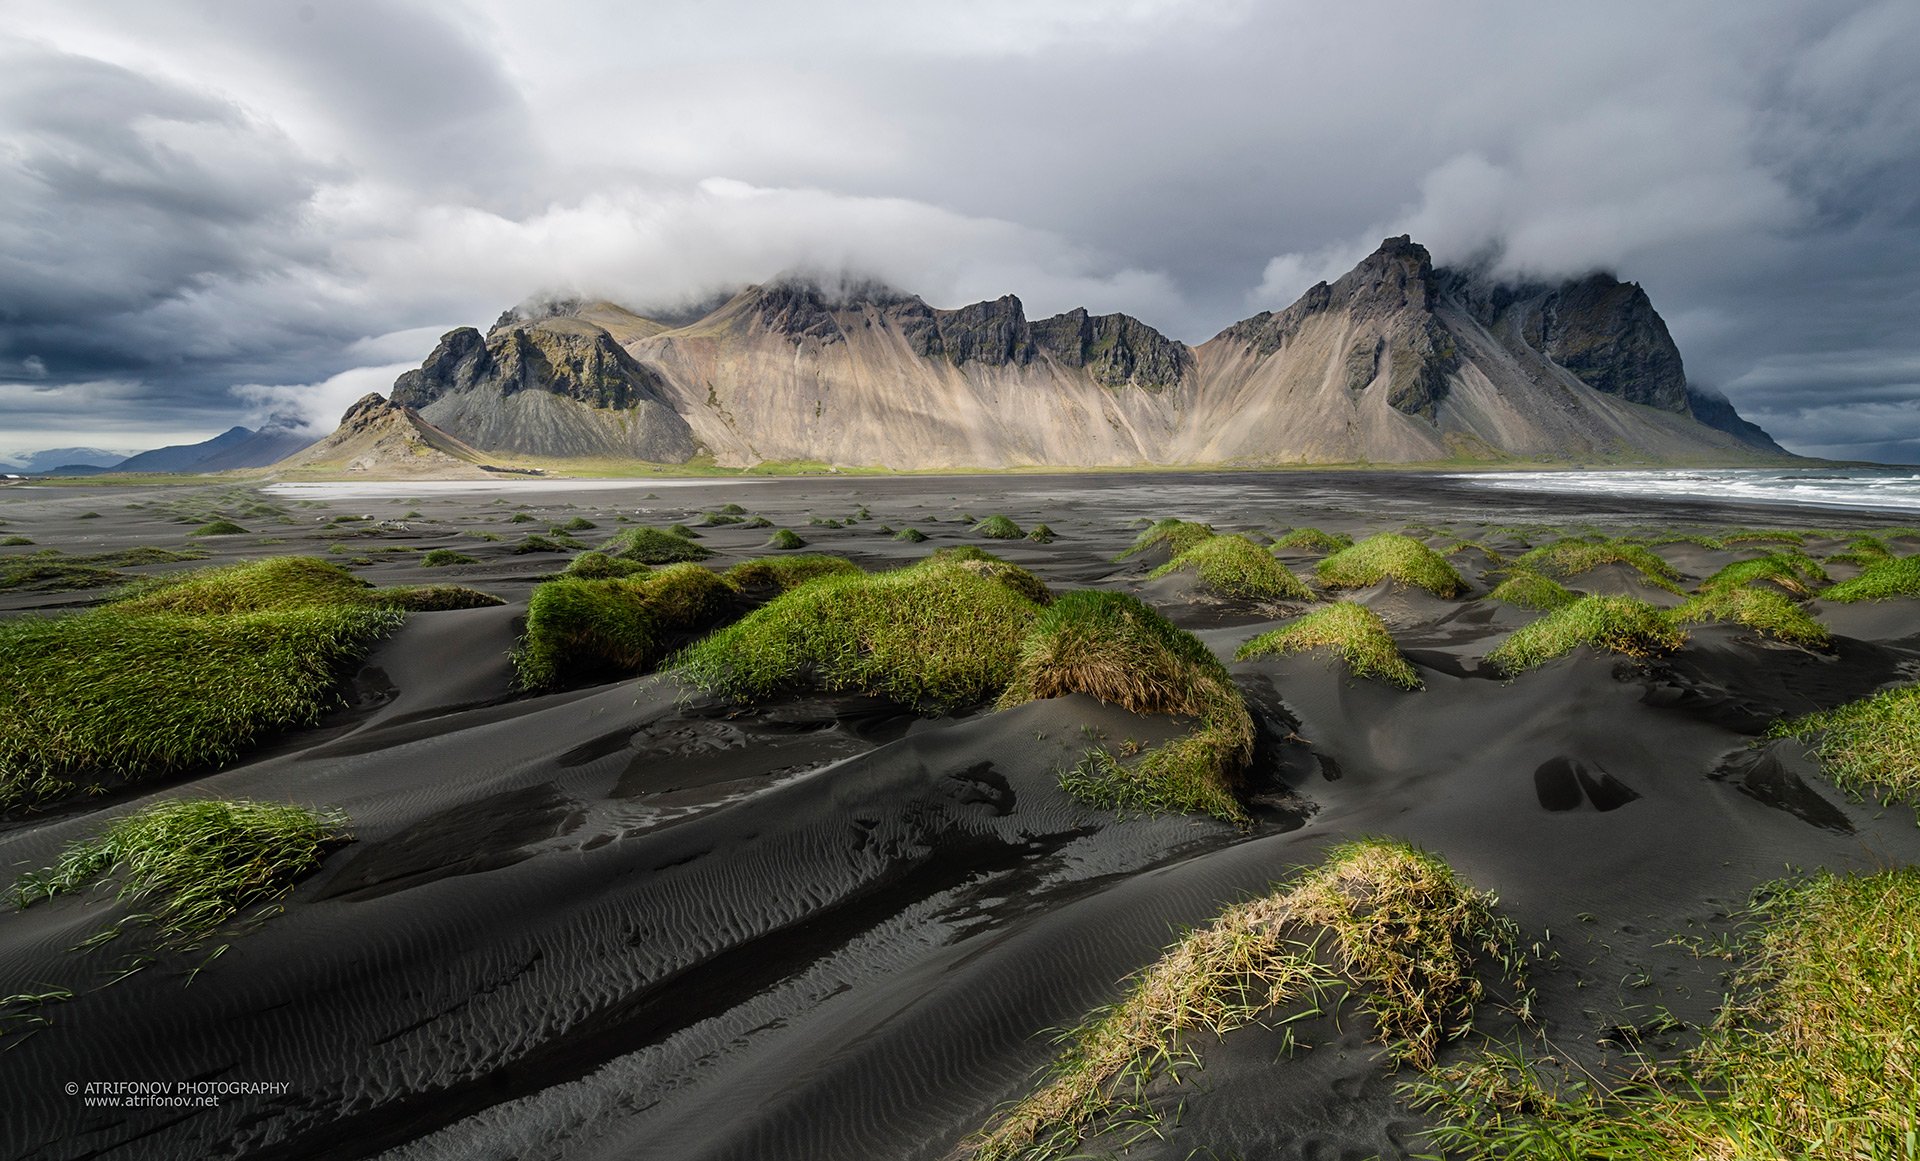 Stokksnes, Vestrahorn, Iceland, mountains, dunes, black sand, beach, ocean, Andrey Trifonov